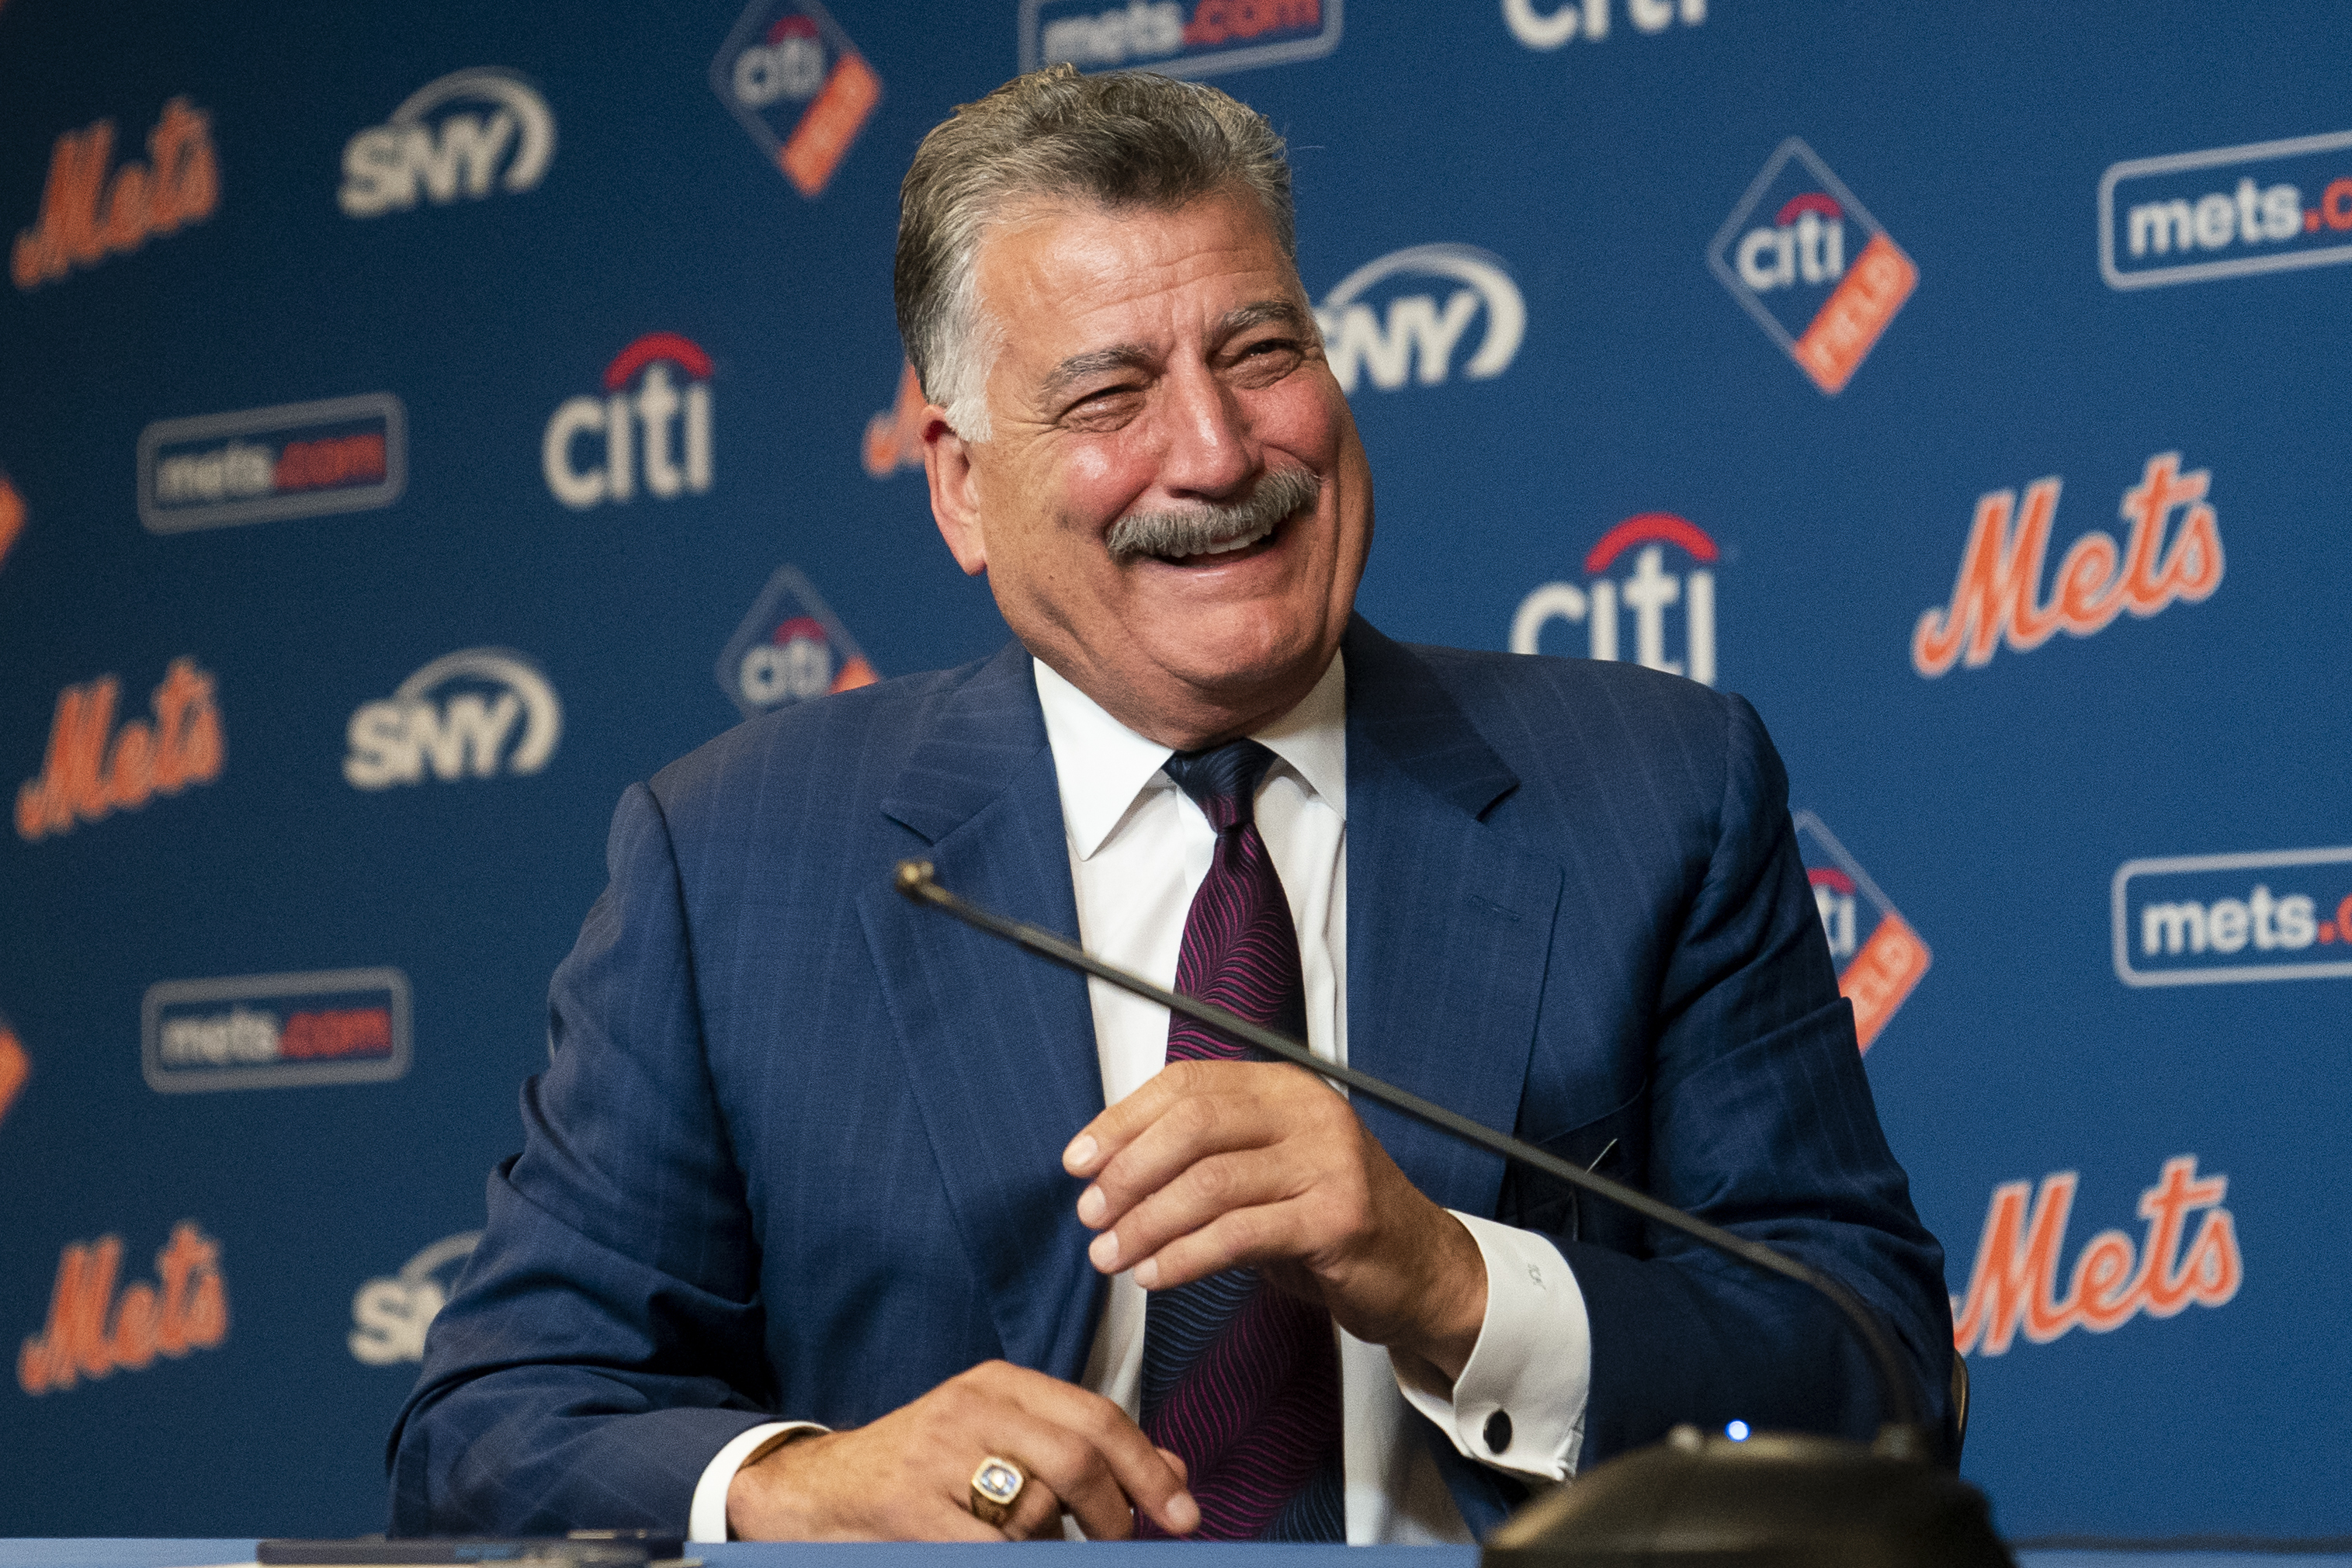 Mets broadcaster Keith Hernandez will miss rest of regular season